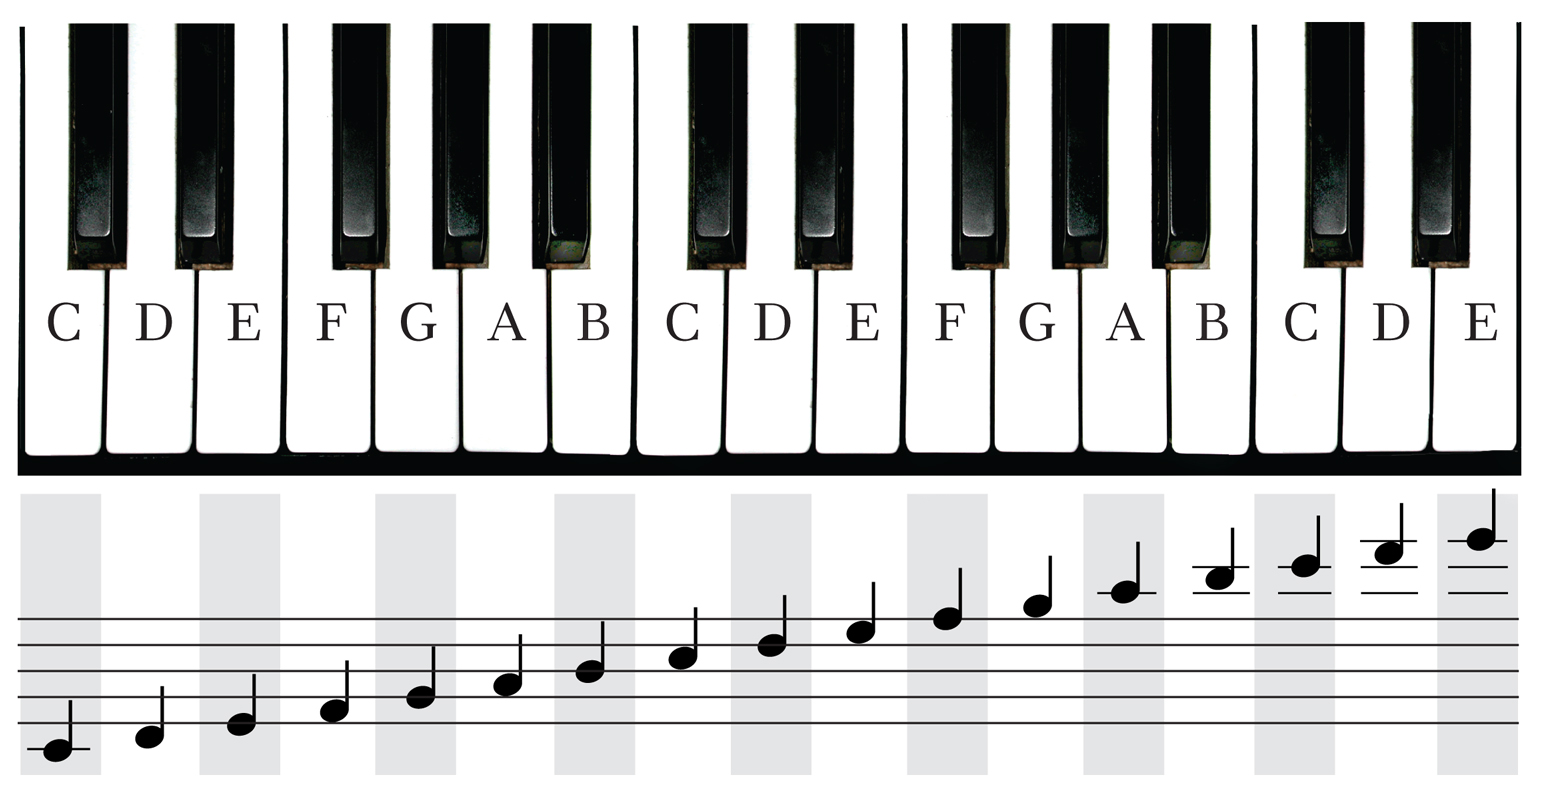 Free Piano Keyboard, Download Free Piano Keyboard png images, Free